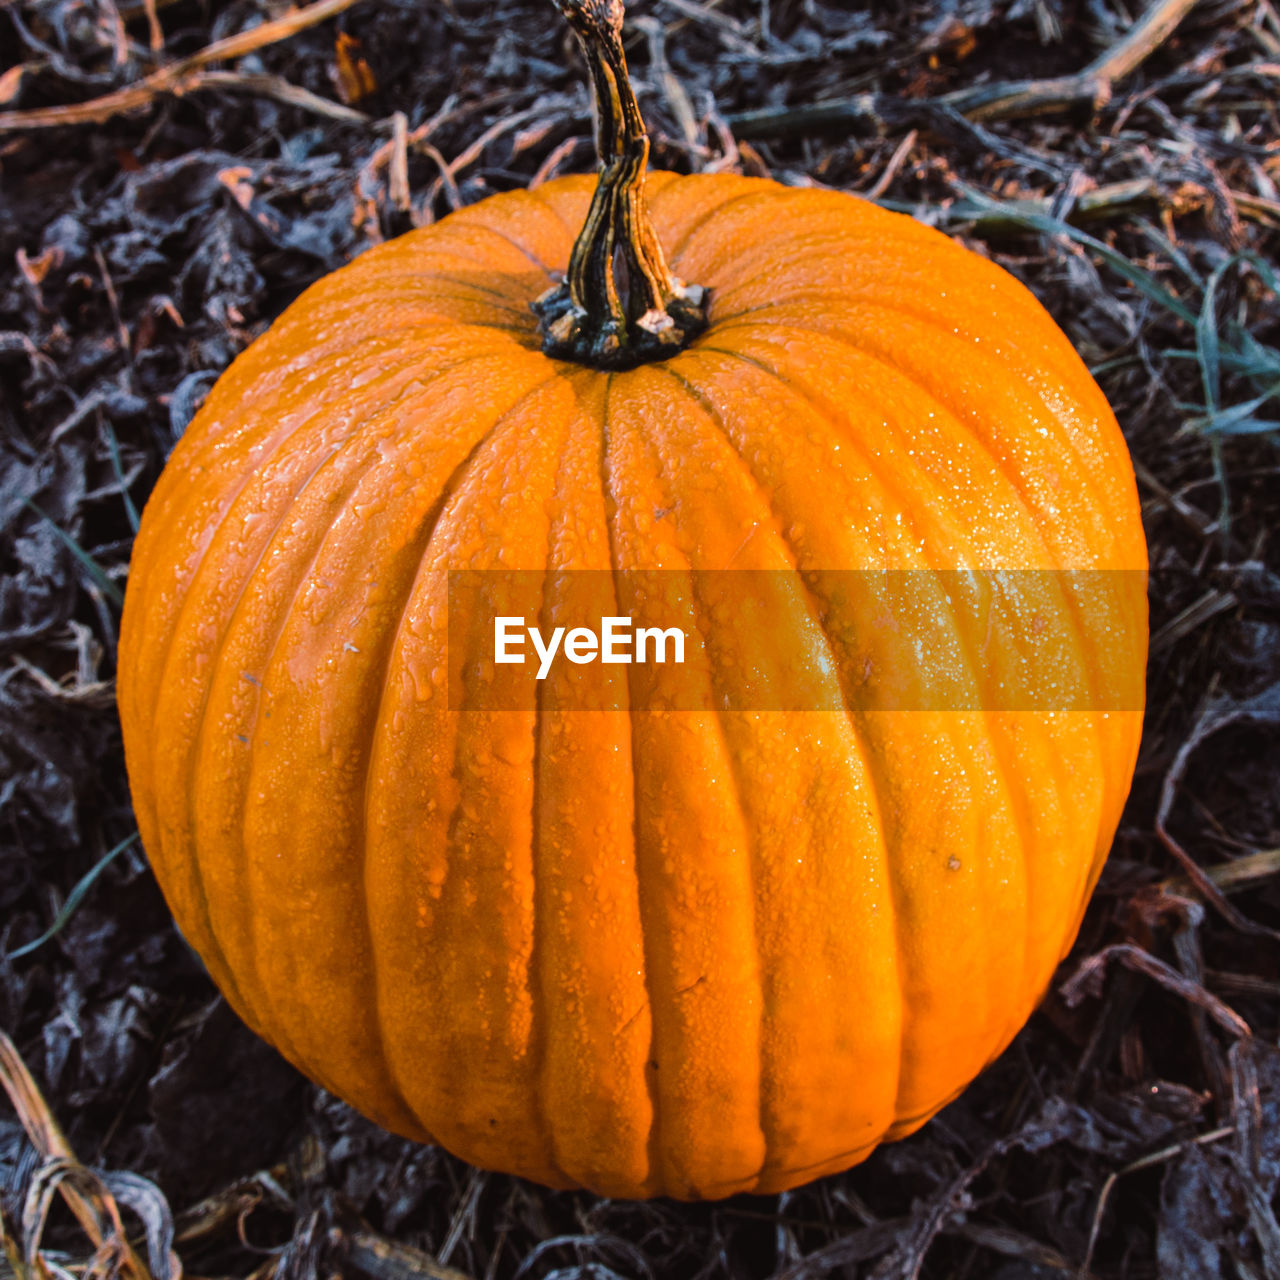 Autumn pumpkin for halloween party